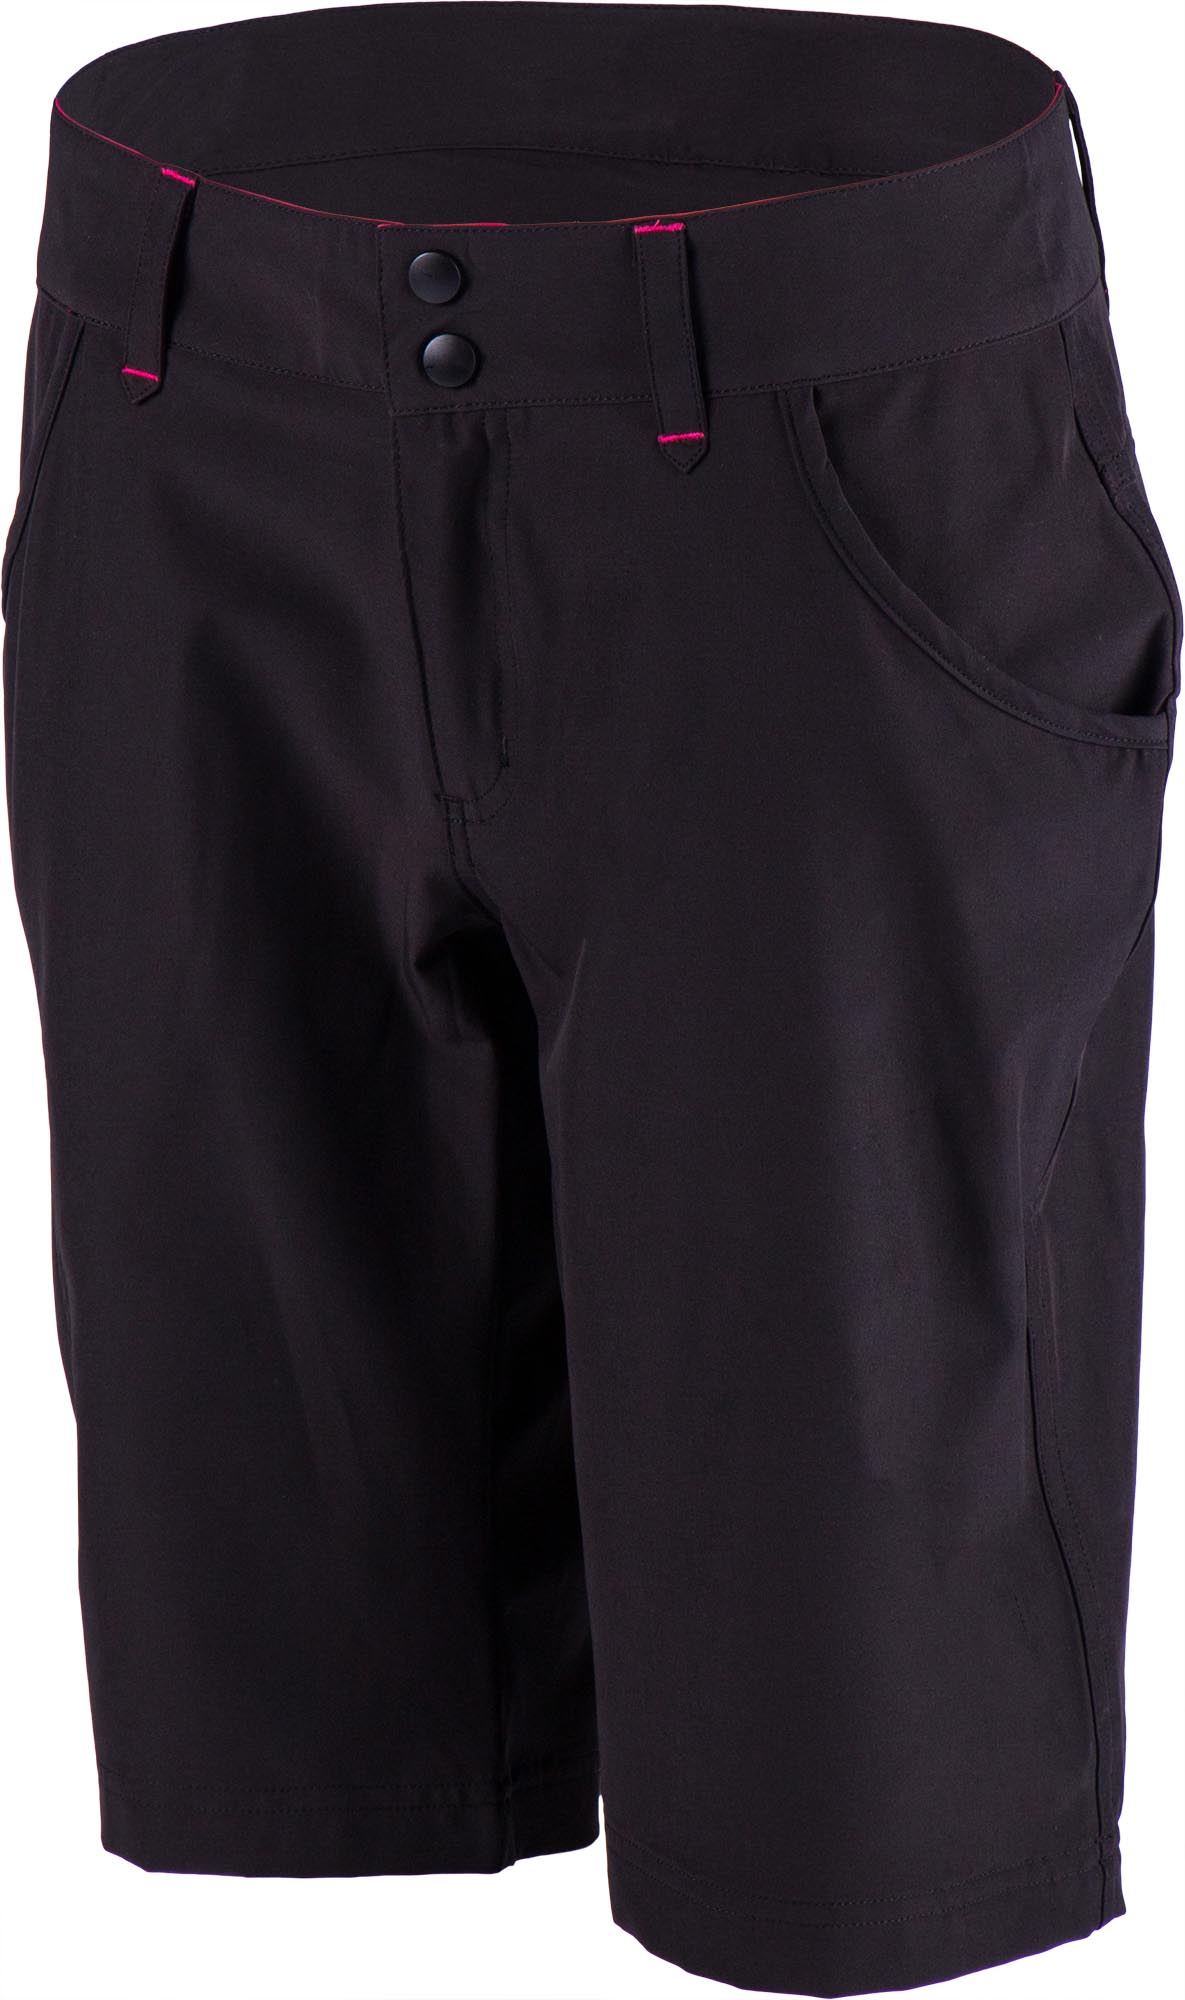 Women’s outdoor shorts